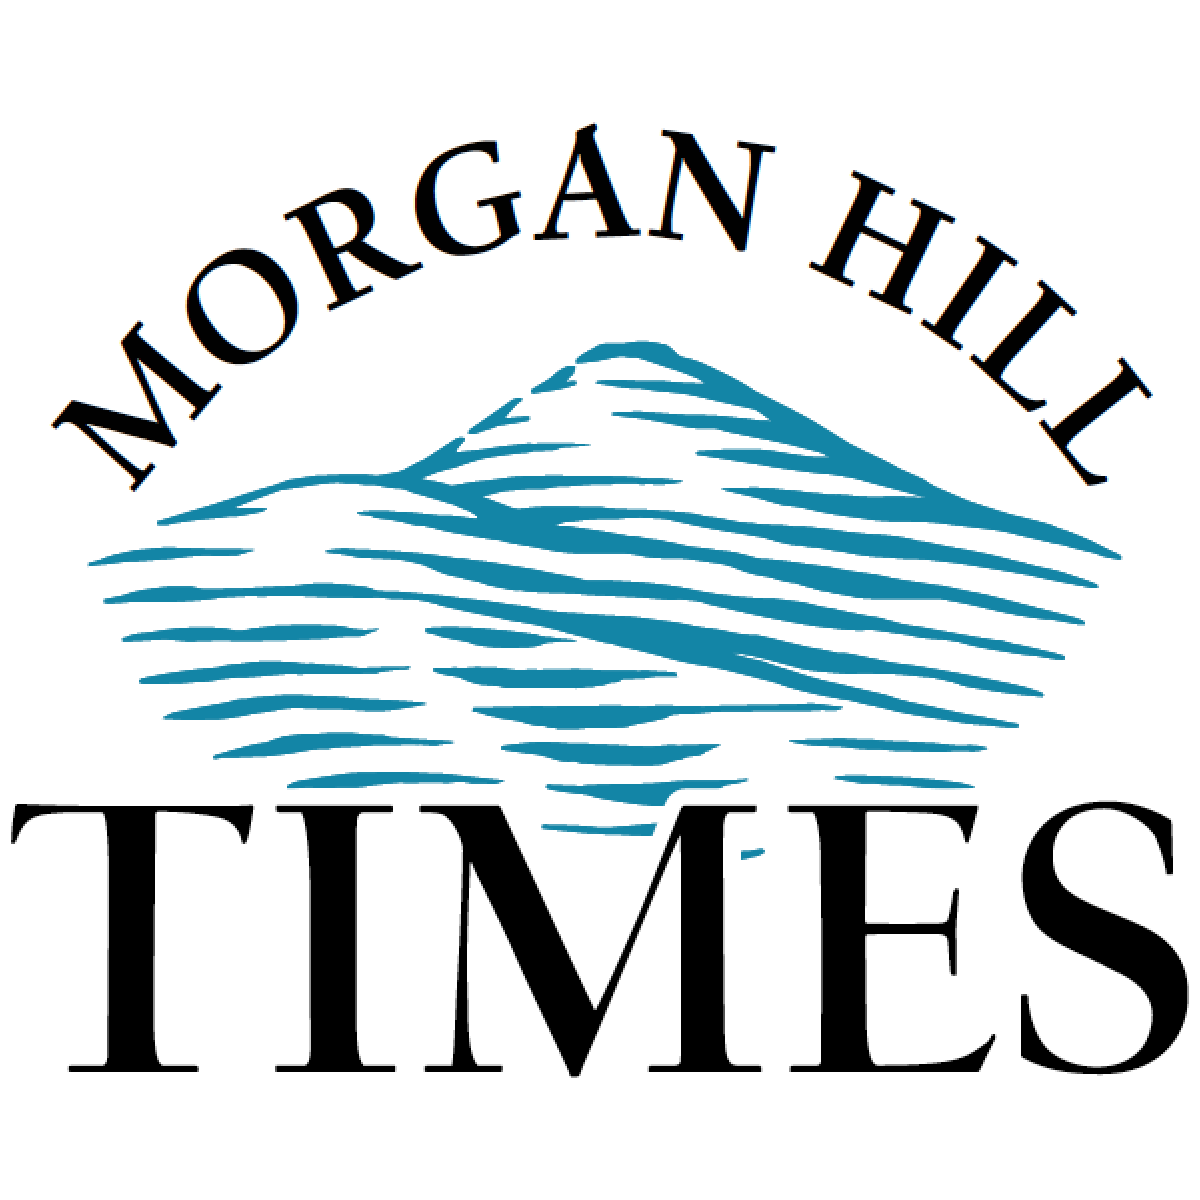 Morgan Hill’s newspaper. #morganhill #siliconvalley #california #news